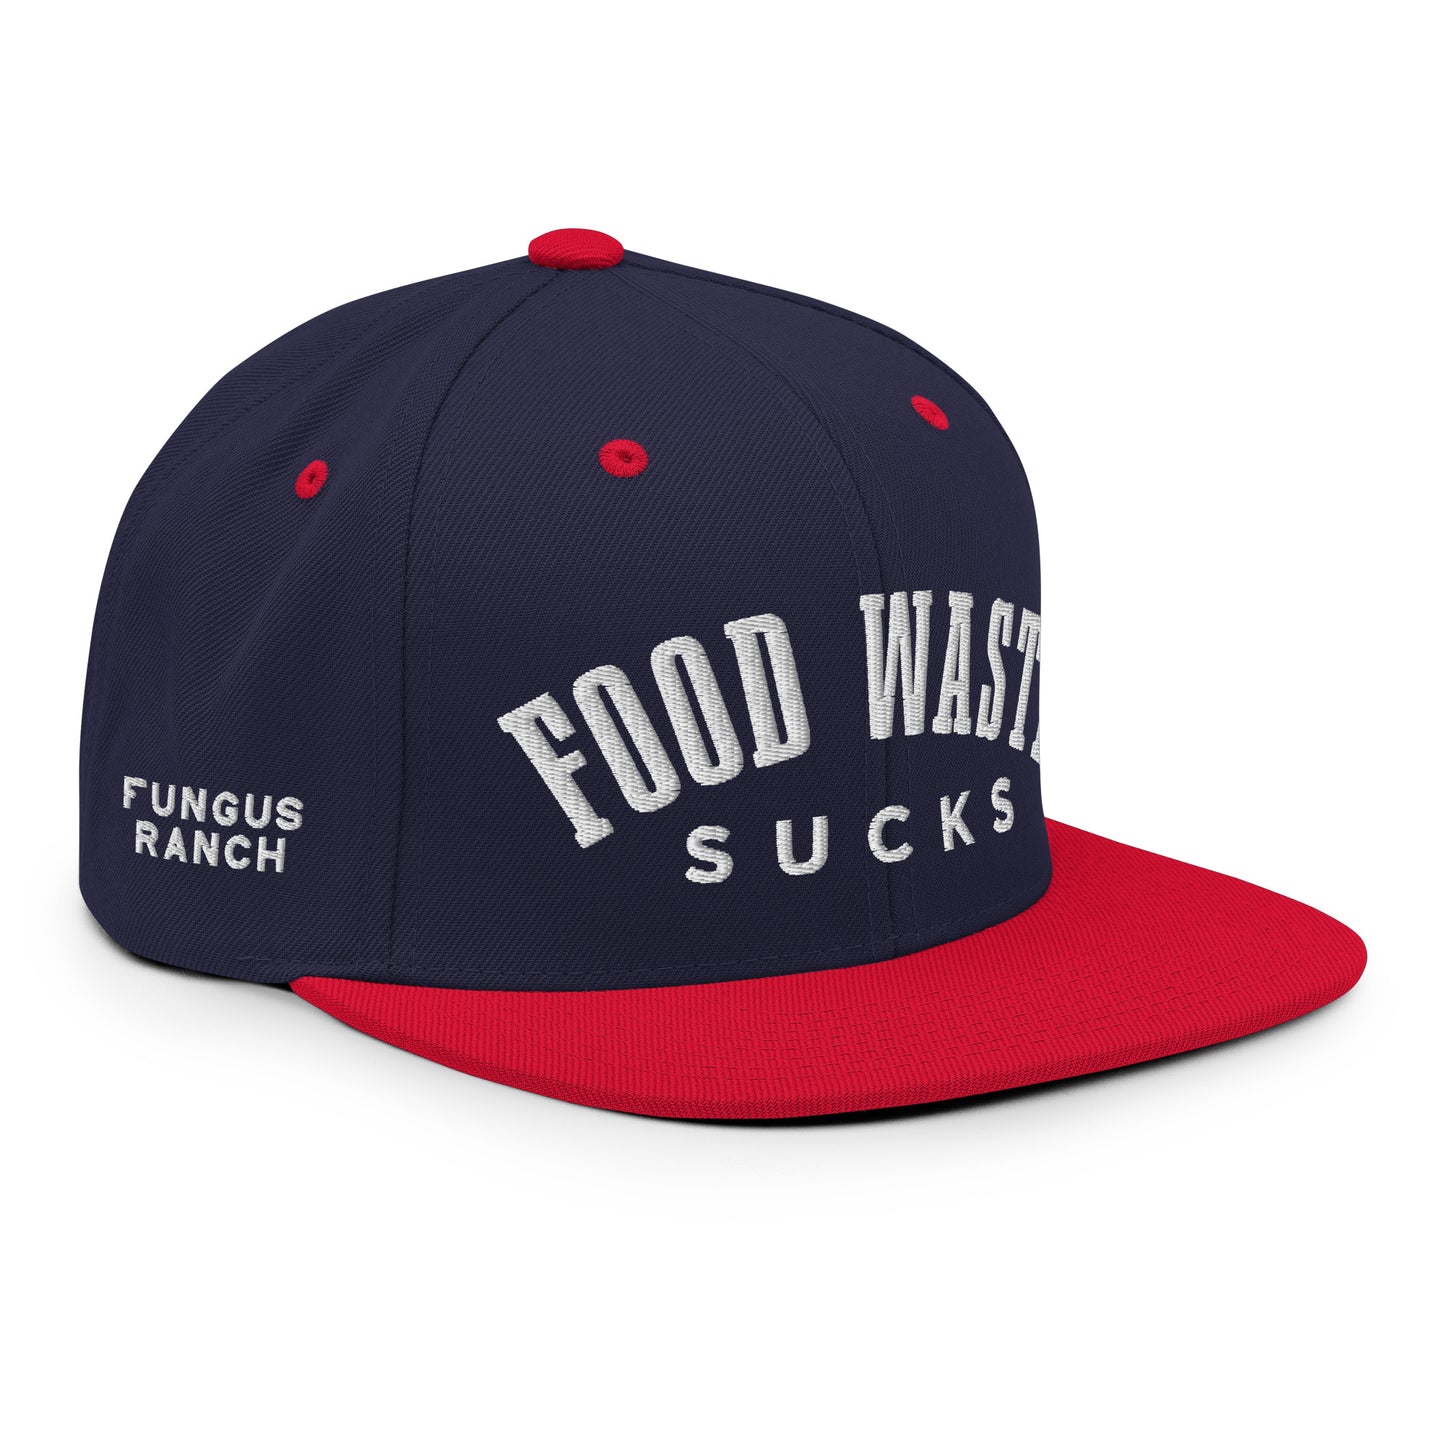 Food Waste Sucks Navy/Red Snapback Hat